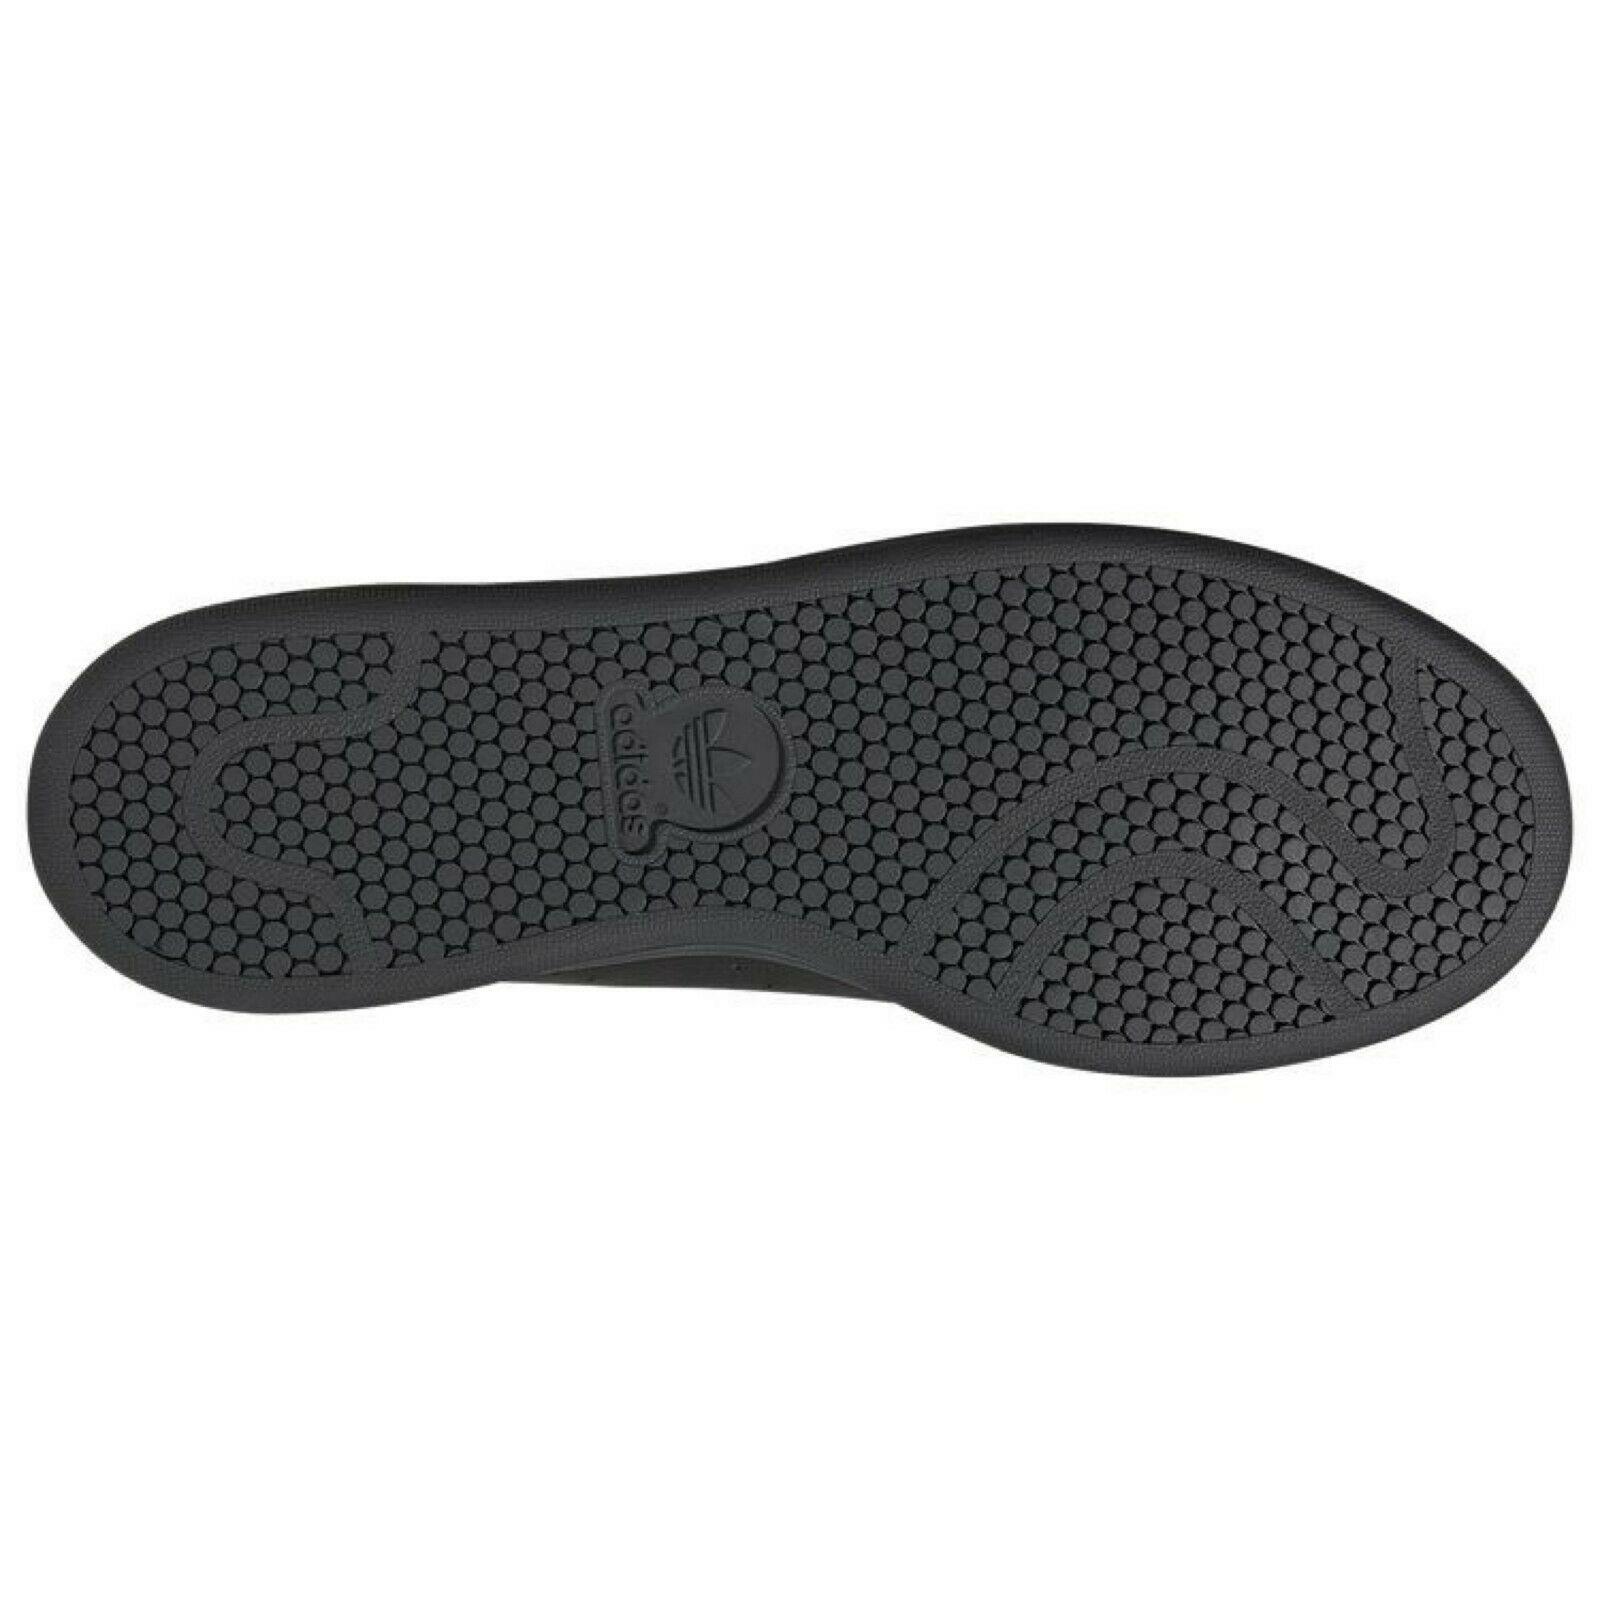 Adidas shoes Originals Stan Smith - Black , Black/Volt Manufacturer 10